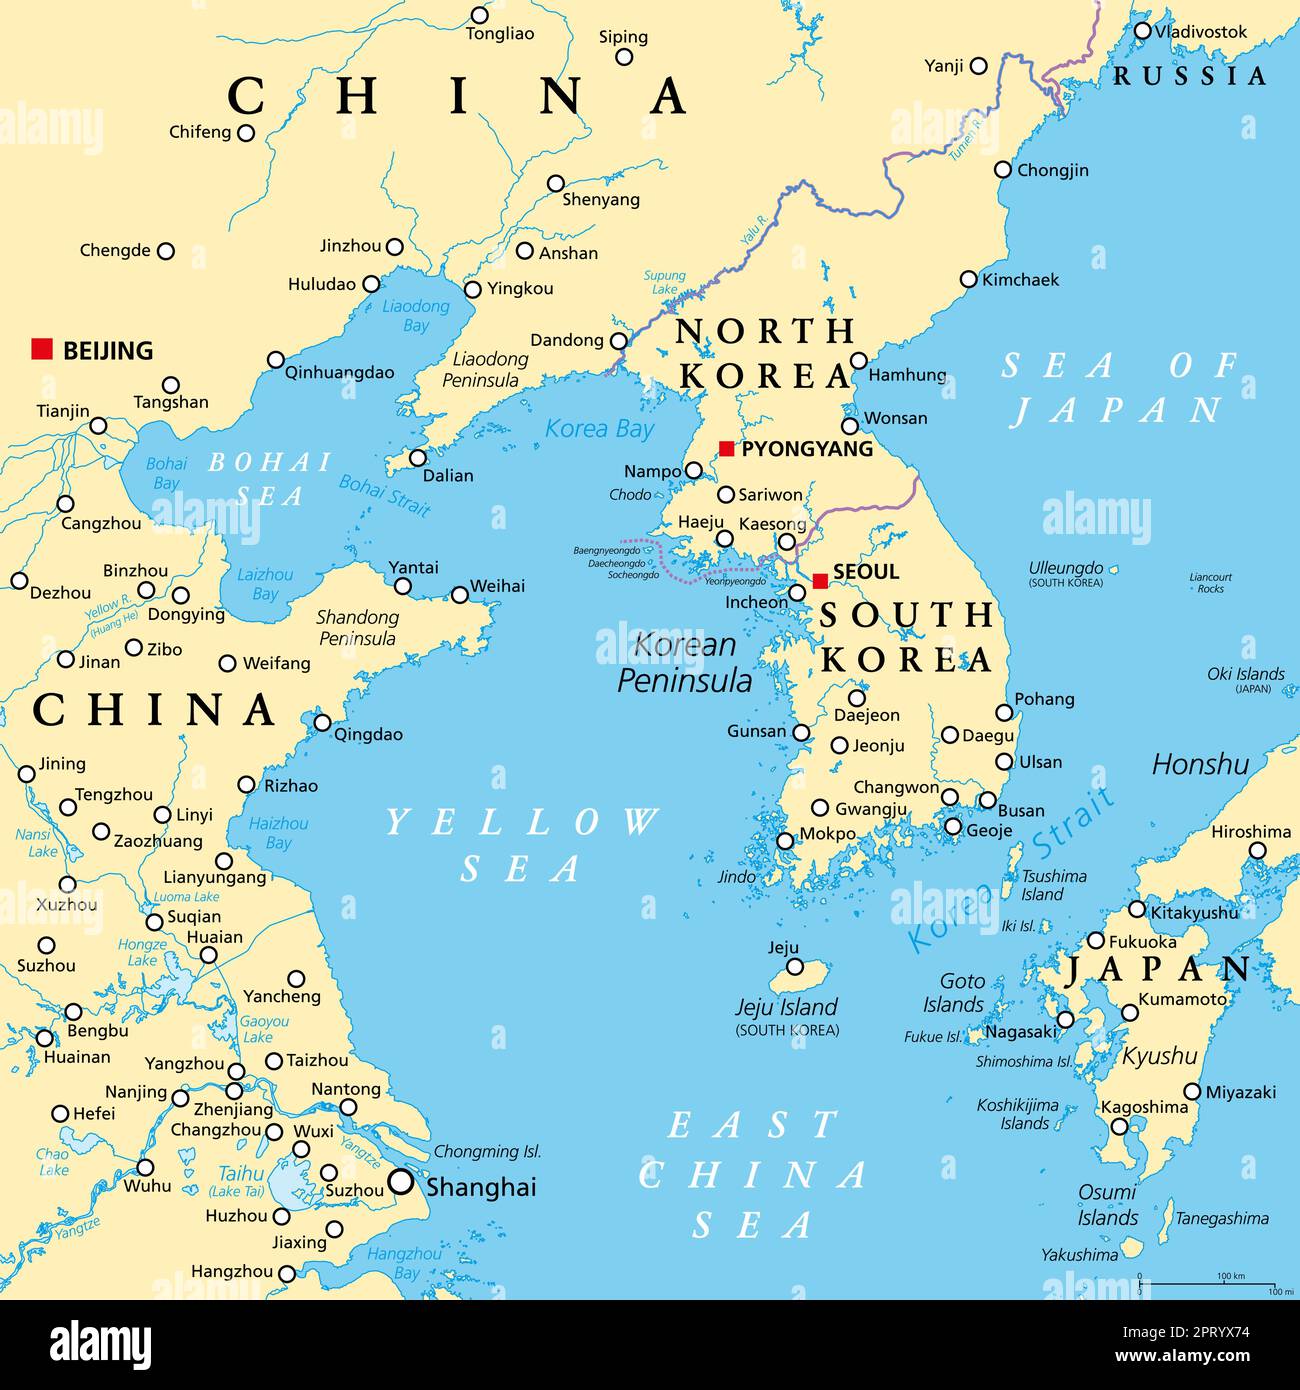 Korean Peninsula region in East Asia, Korea, political map Stock Vector